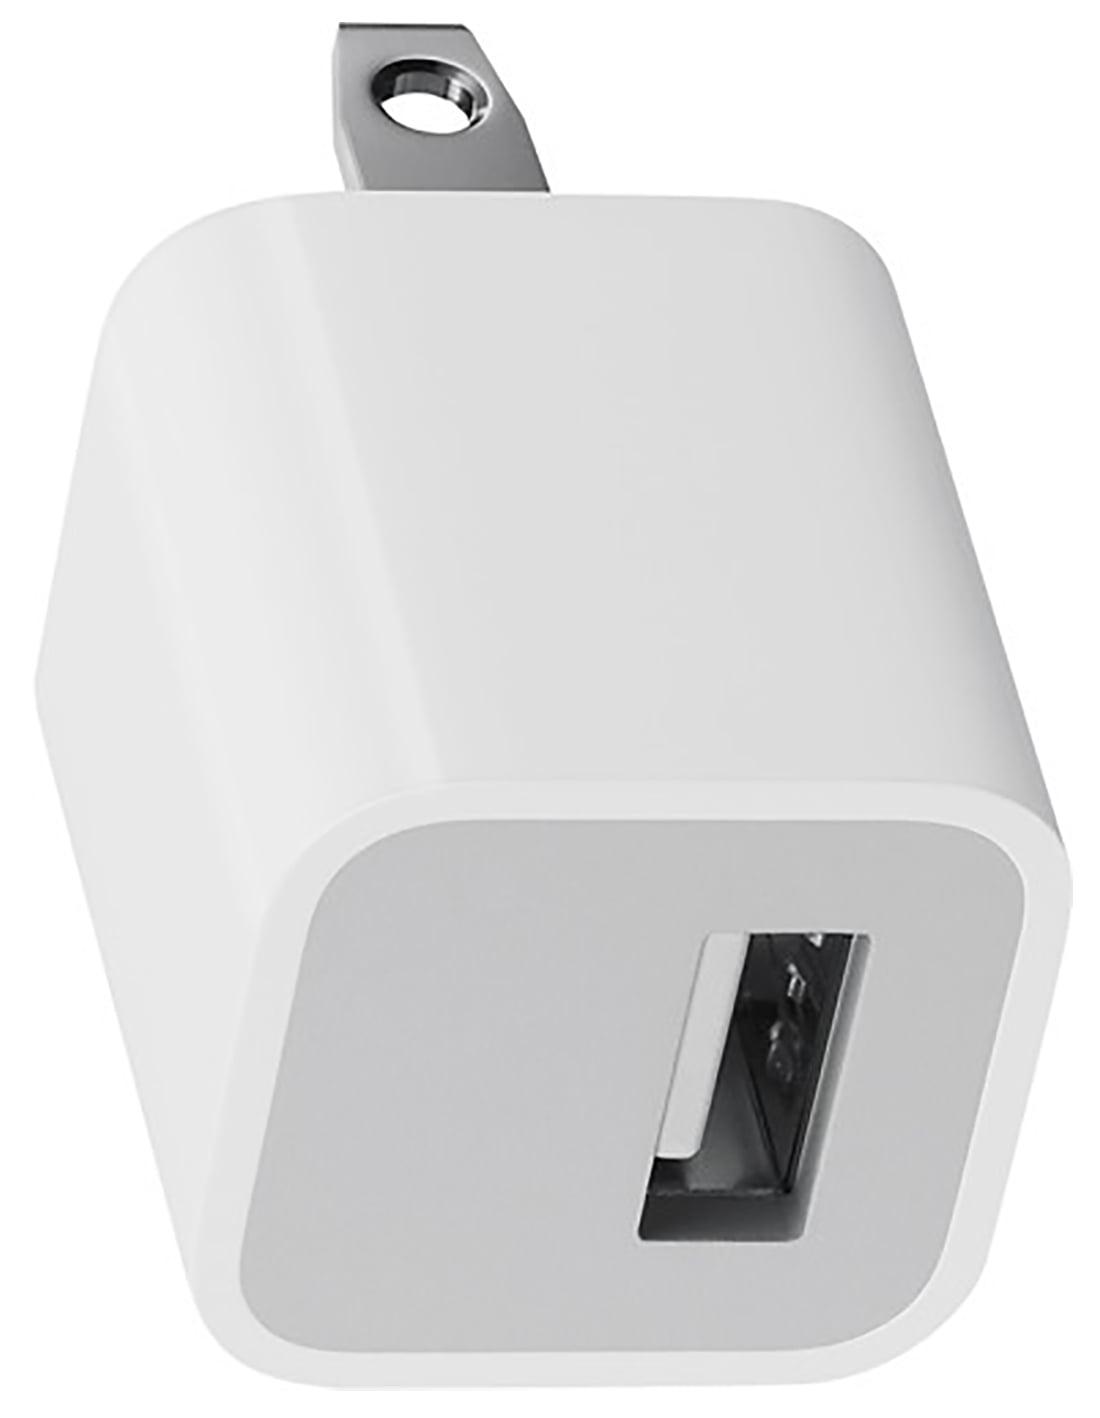 Apple 5W USB Power Adapter - White (MD810LL/A) (New, Bulk Packaging)